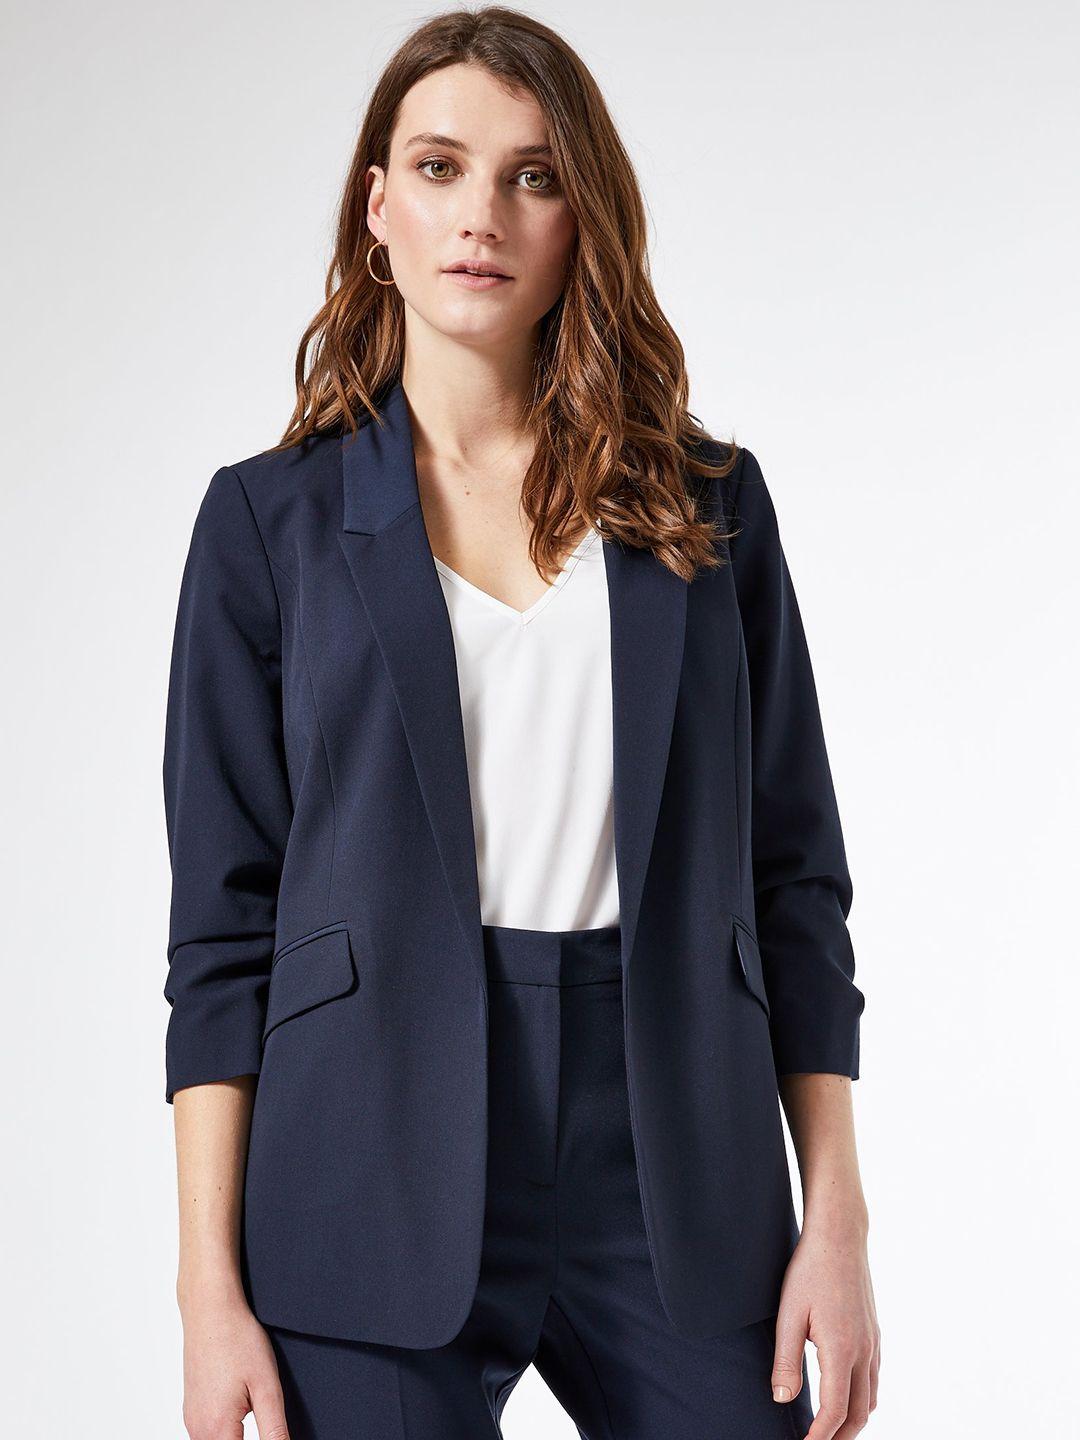 dorothy perkins women navy blue solid formal blazer